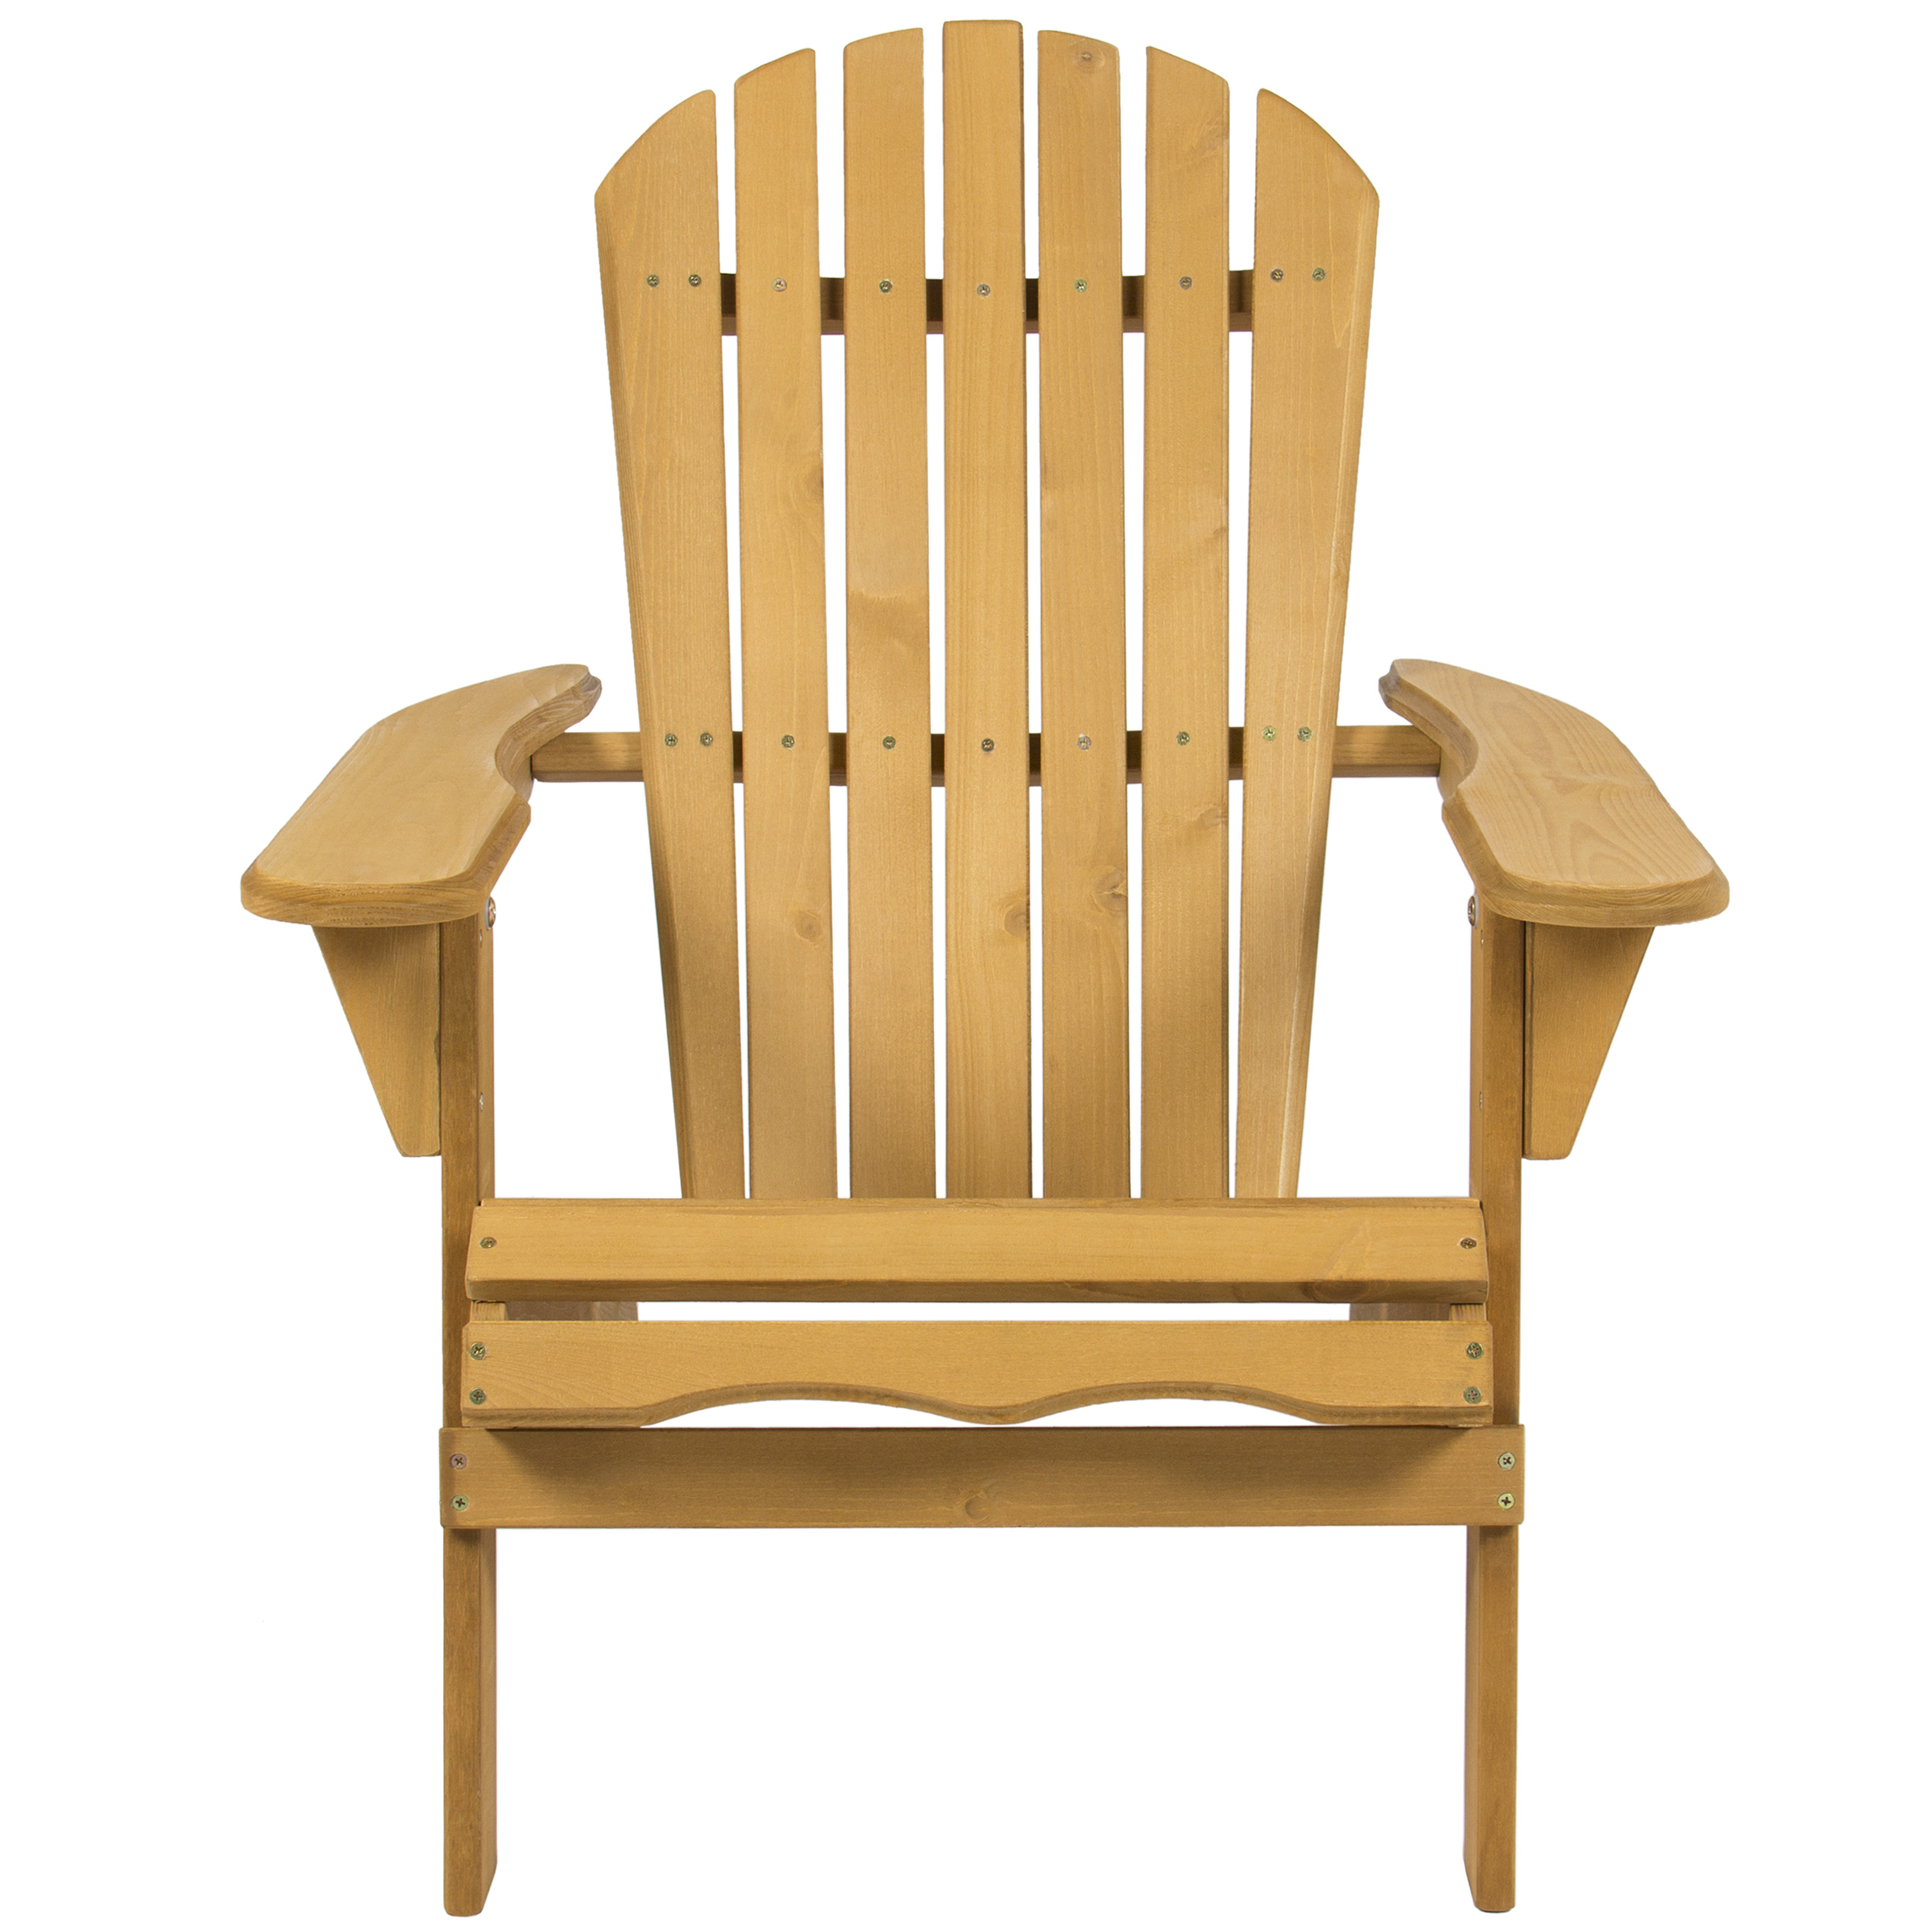 BCP Foldable Wooden Adirondack Chair - Natural Finish eBay